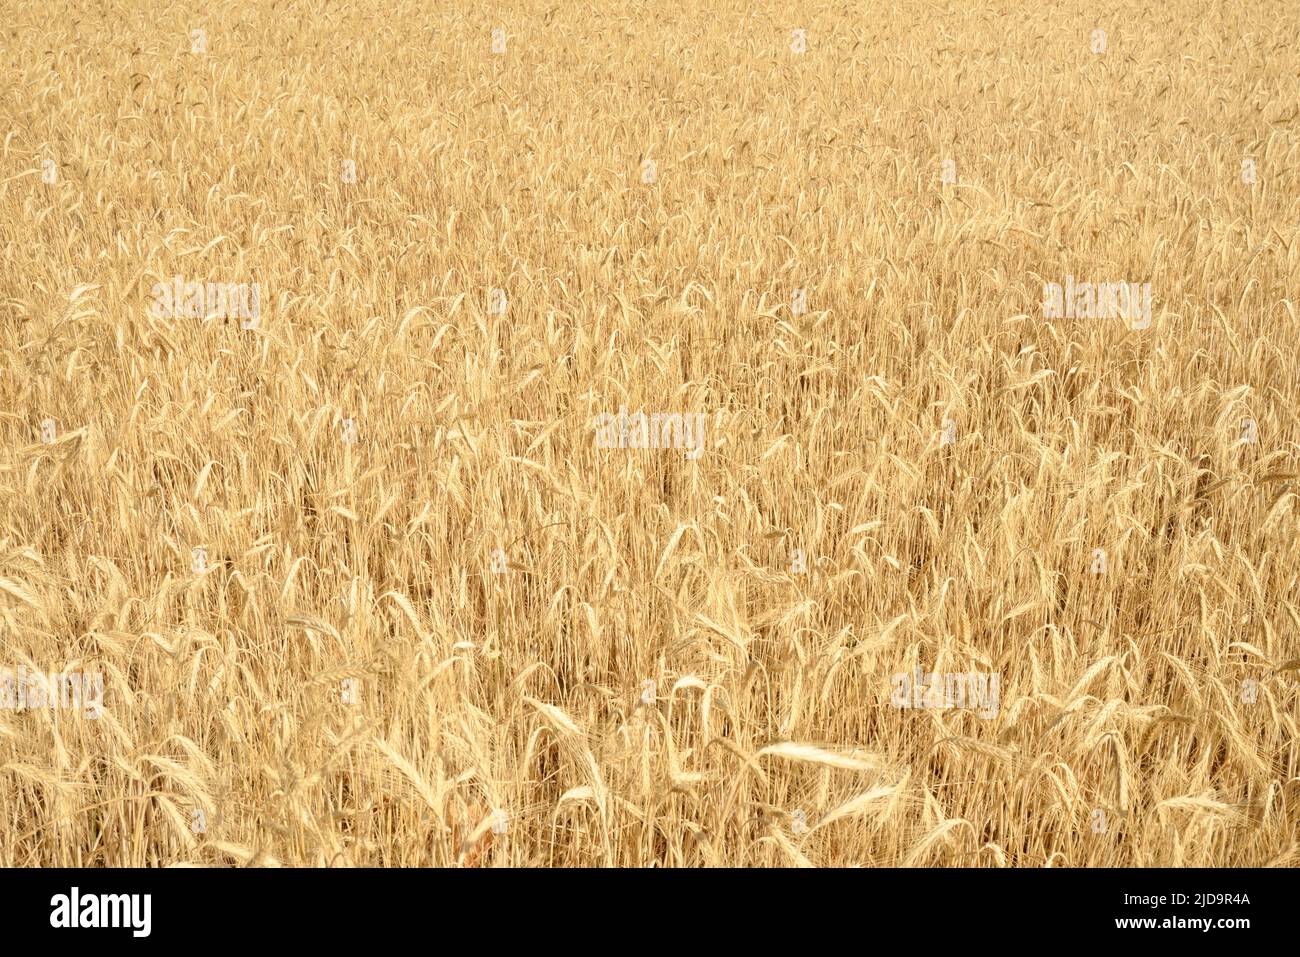 Yellow wheat field Stock Photo